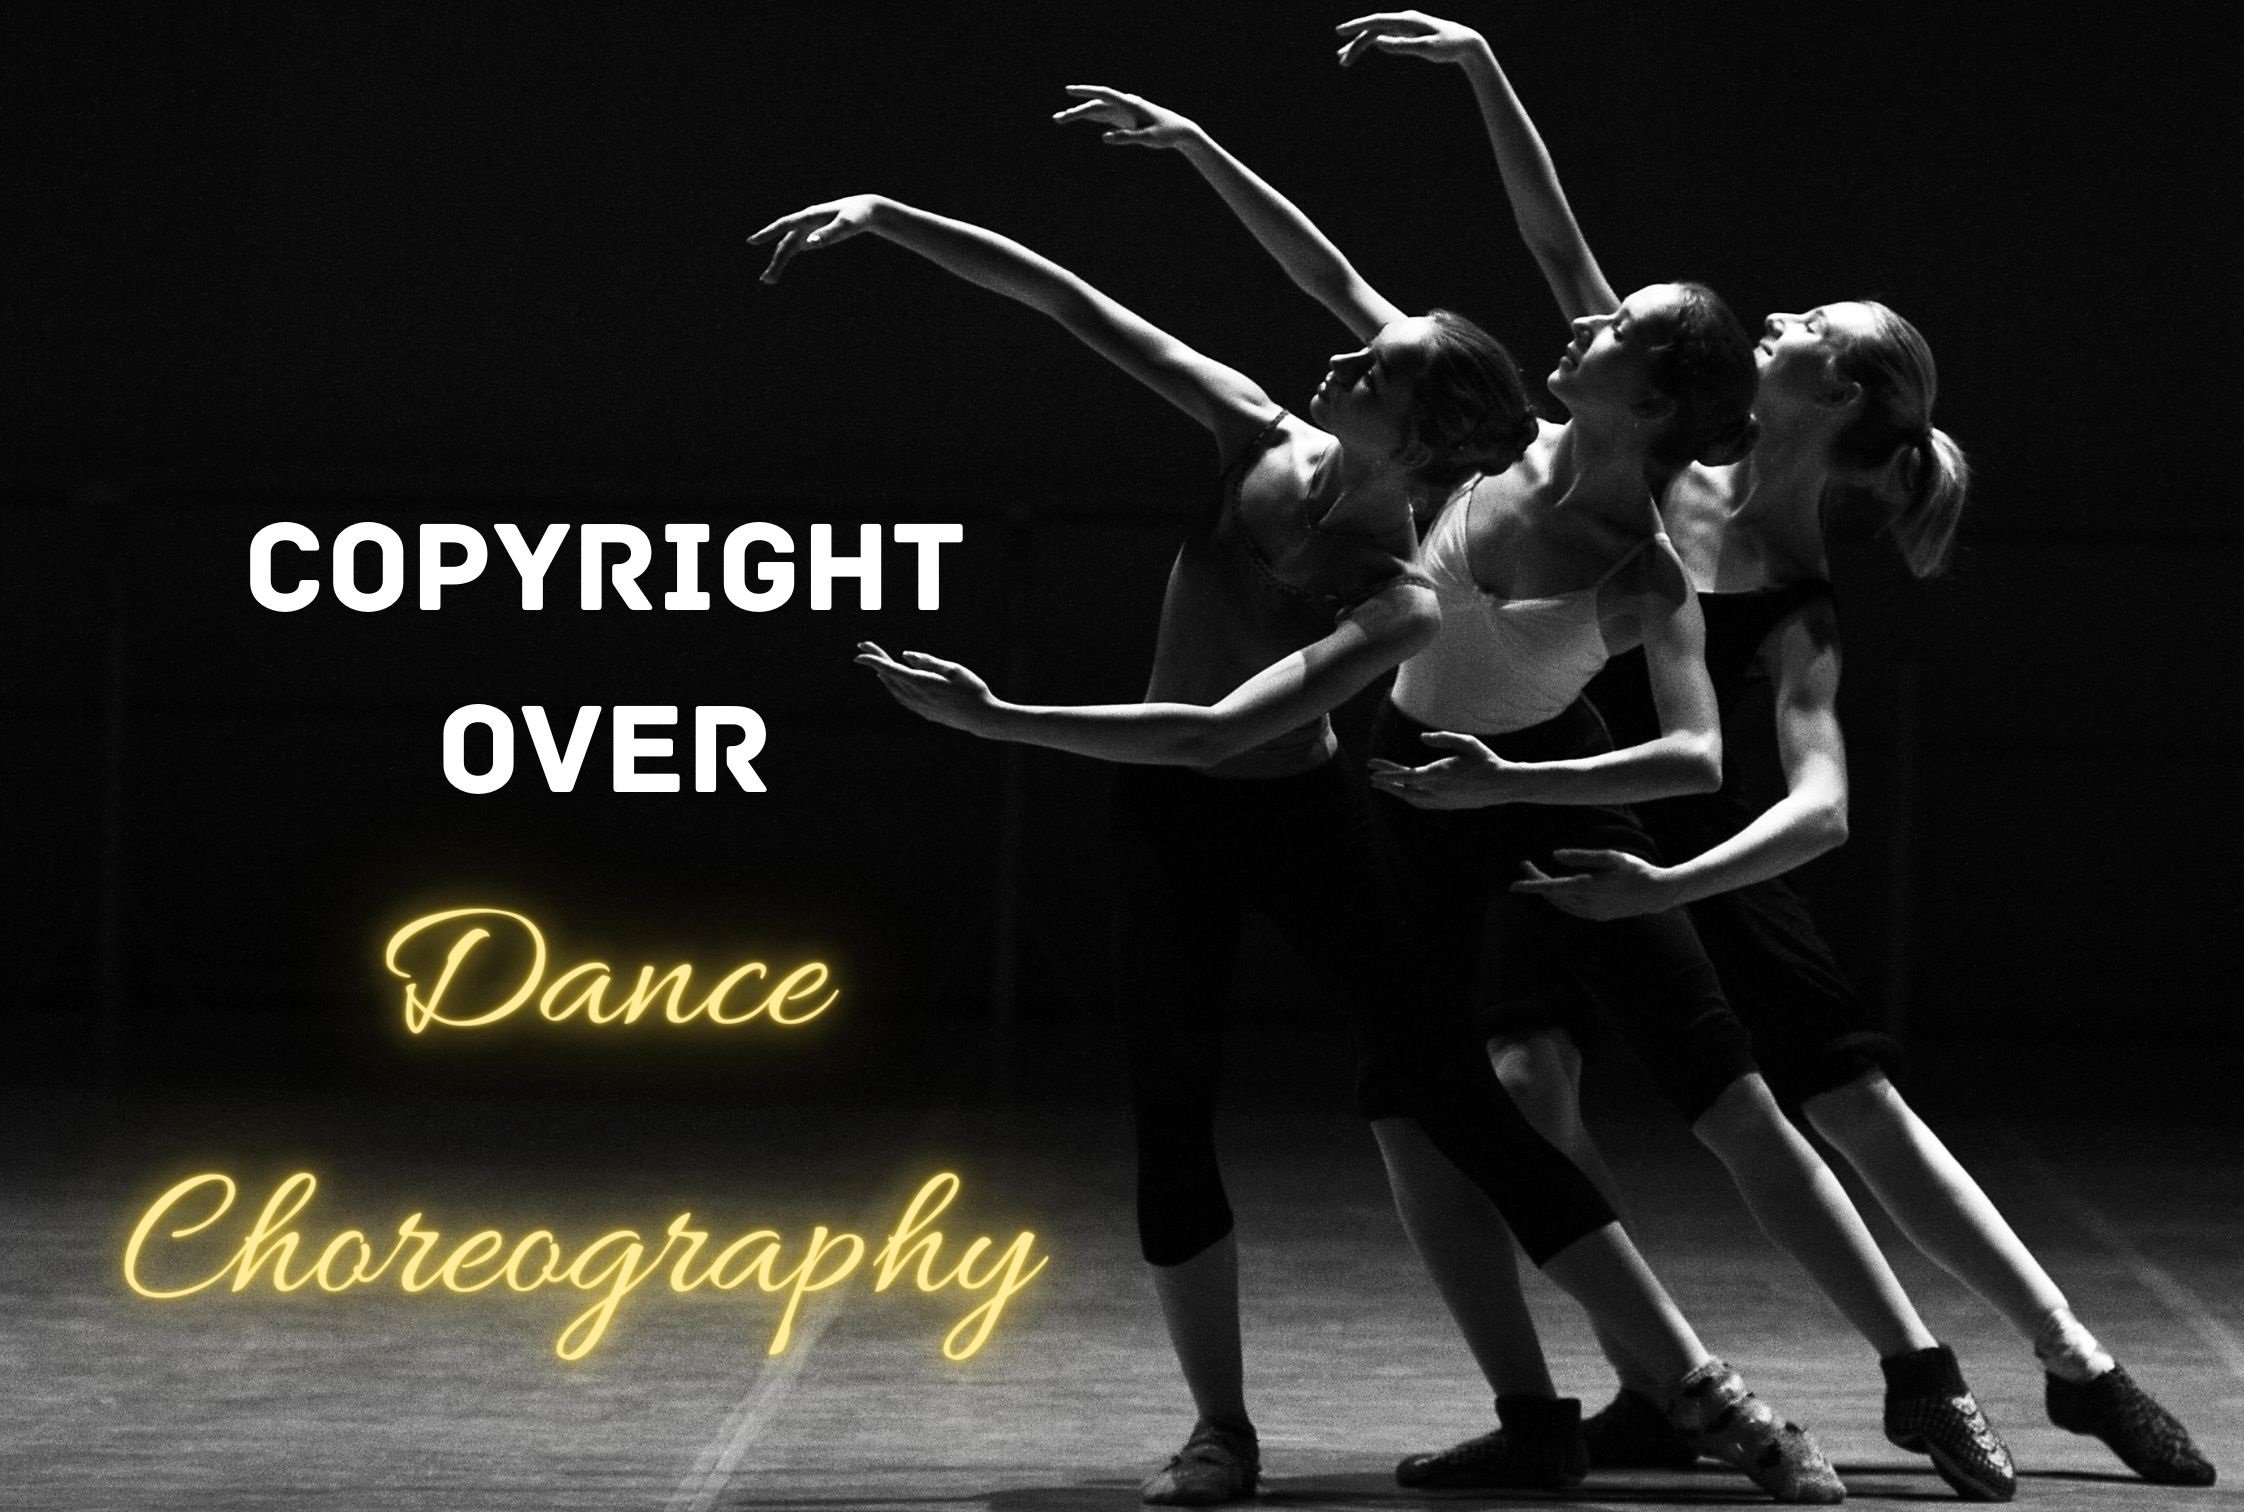 COPYRIGHT OVER DANCE CHOREOGRAPHY